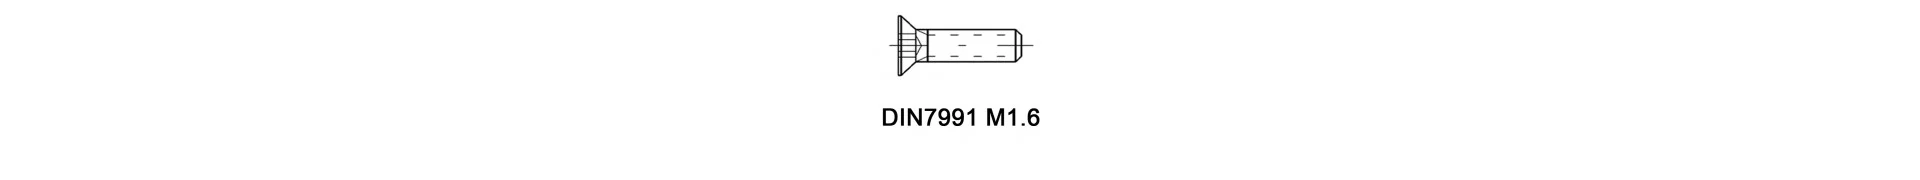 DIN7991 M1.6